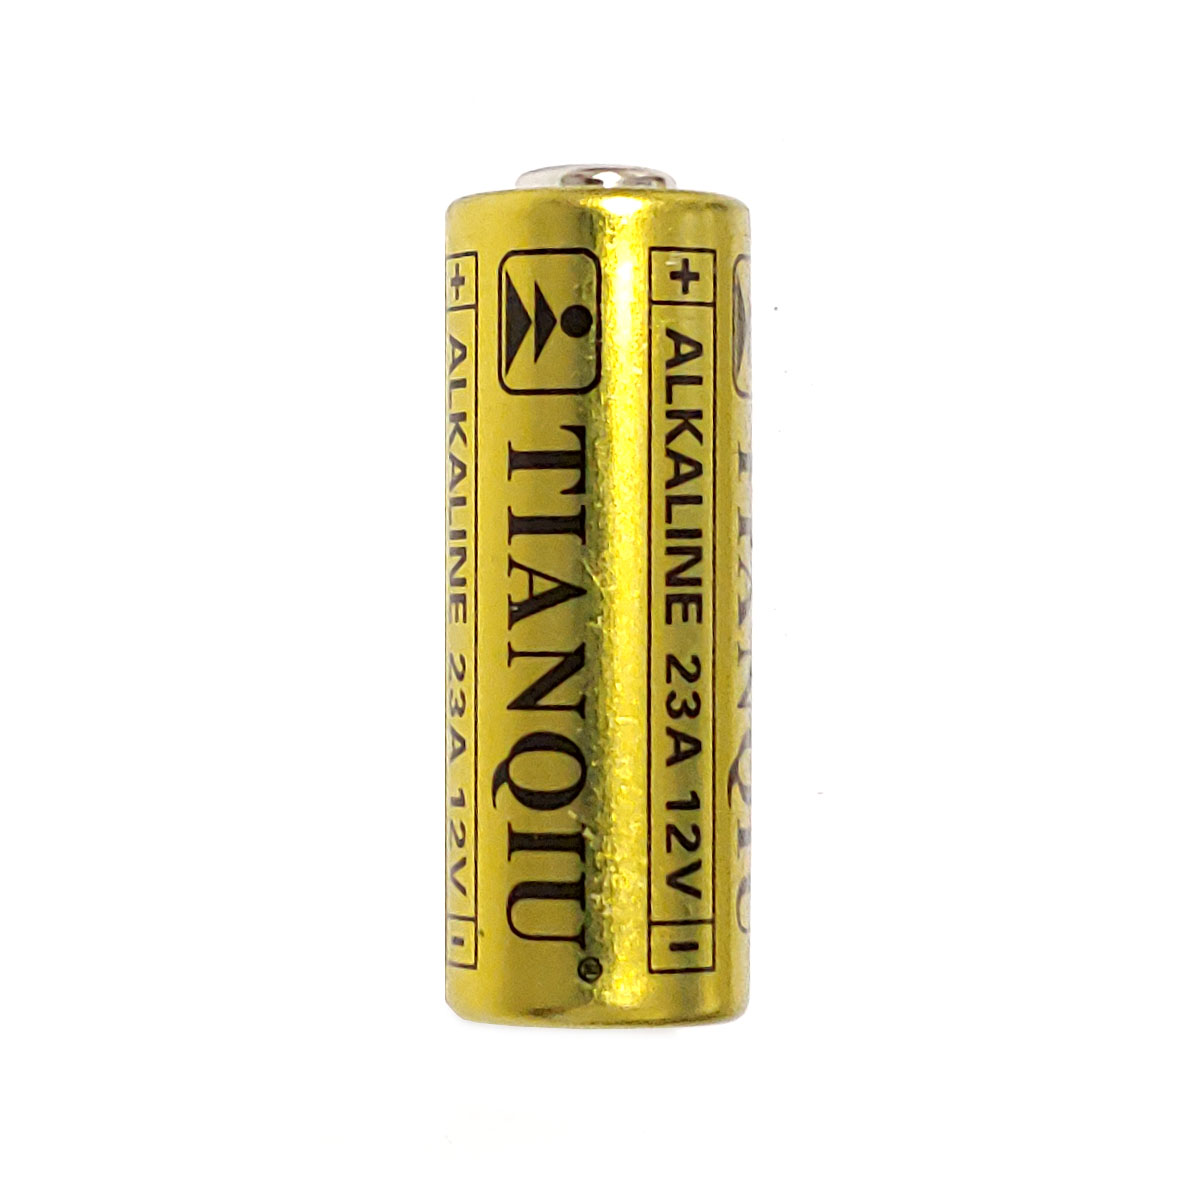 Tianqiu A27 Battery, Alkaline, Tear Strip (5 Batteries)